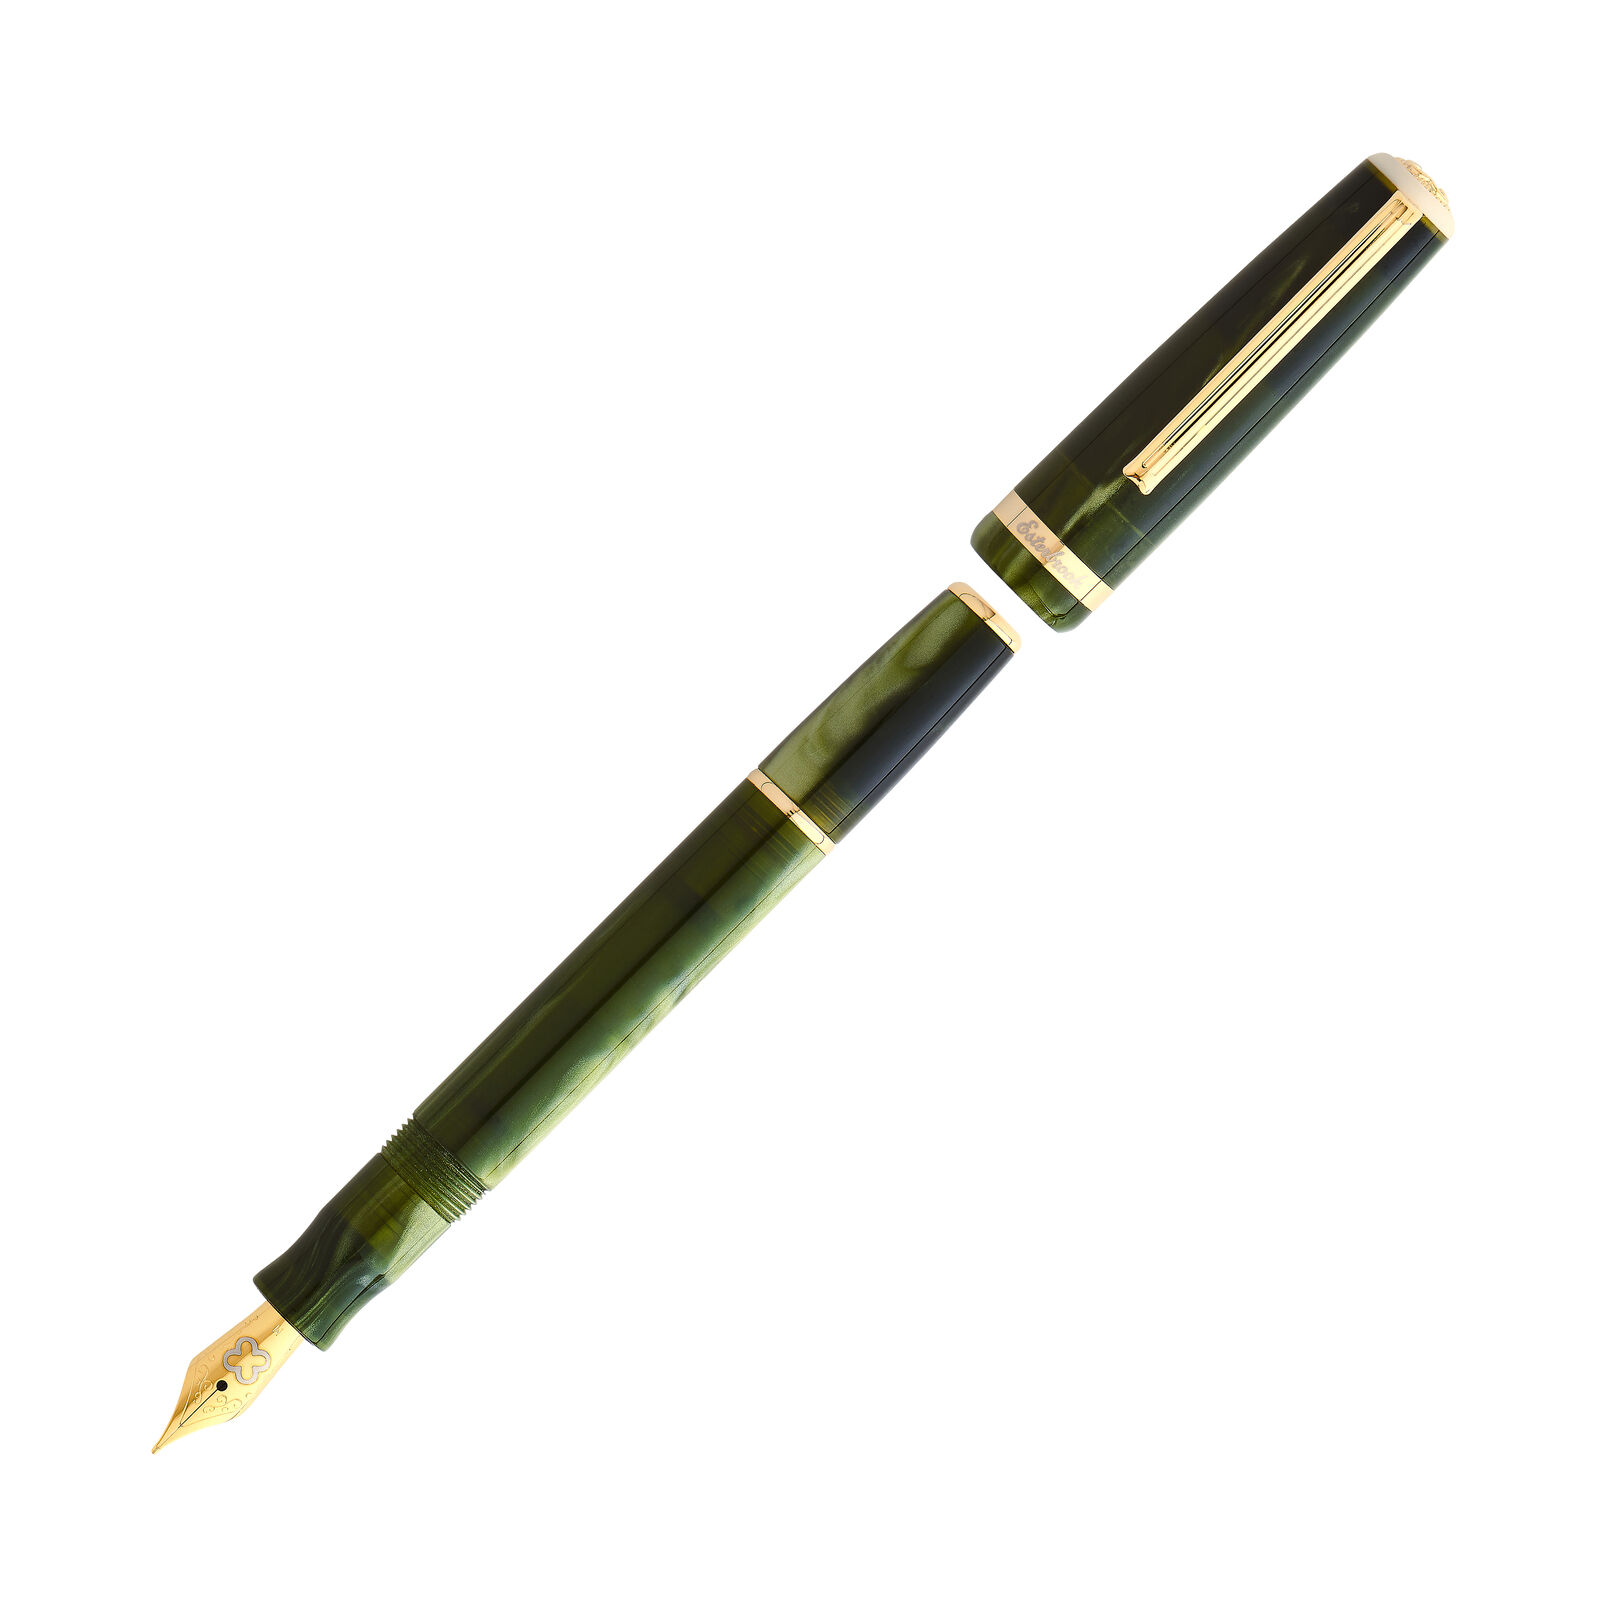 Esterbrook JR Pocket Fountain Pen in Palm Green - Medium Point - NEW in Box